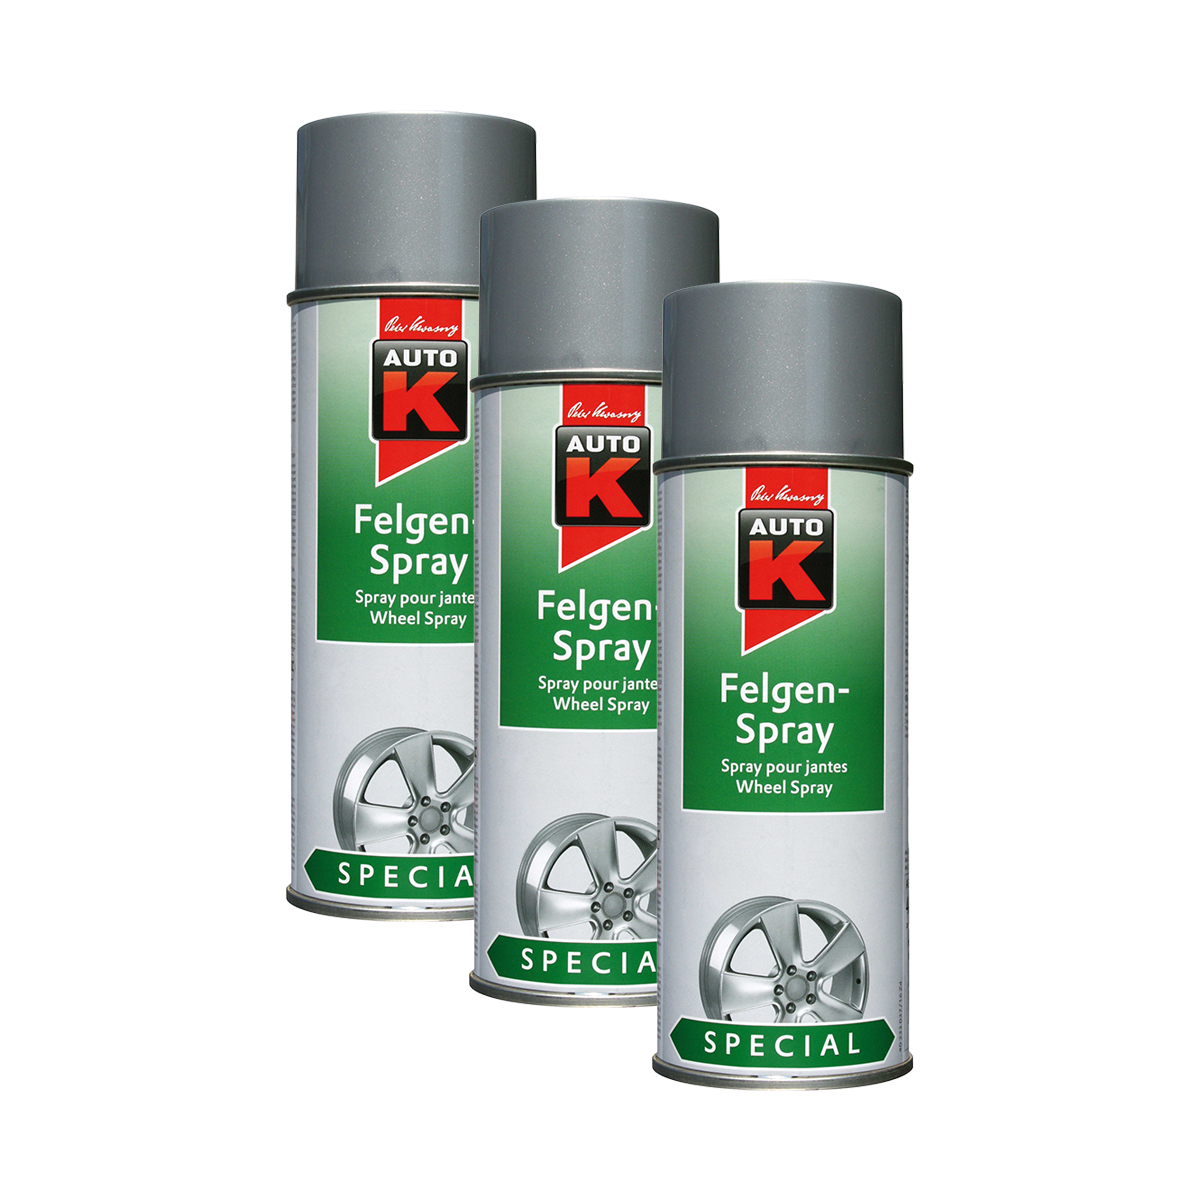 3x KWASNY 233 037 AUTO-K SPECIAL Felgen-Spray Kristallsilber Abriebfest 400ml